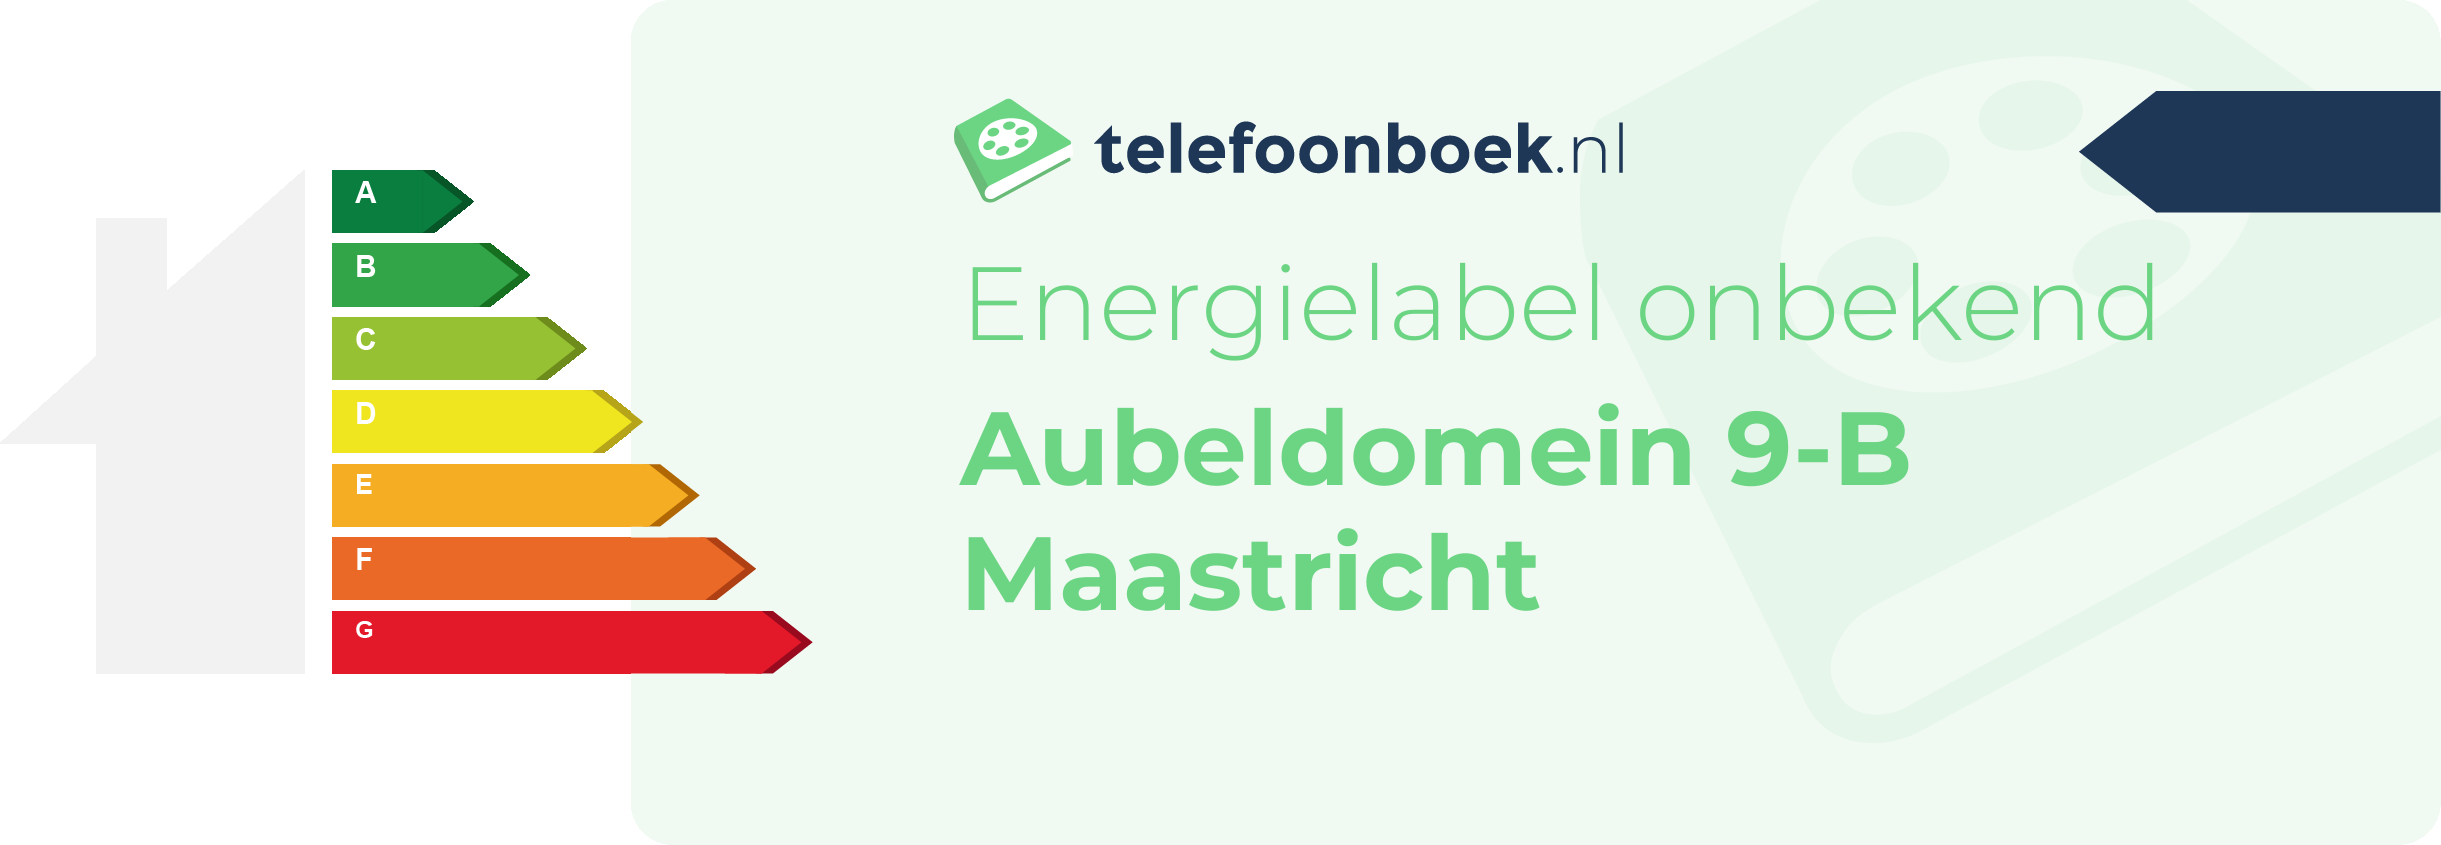 Energielabel Aubeldomein 9-B Maastricht